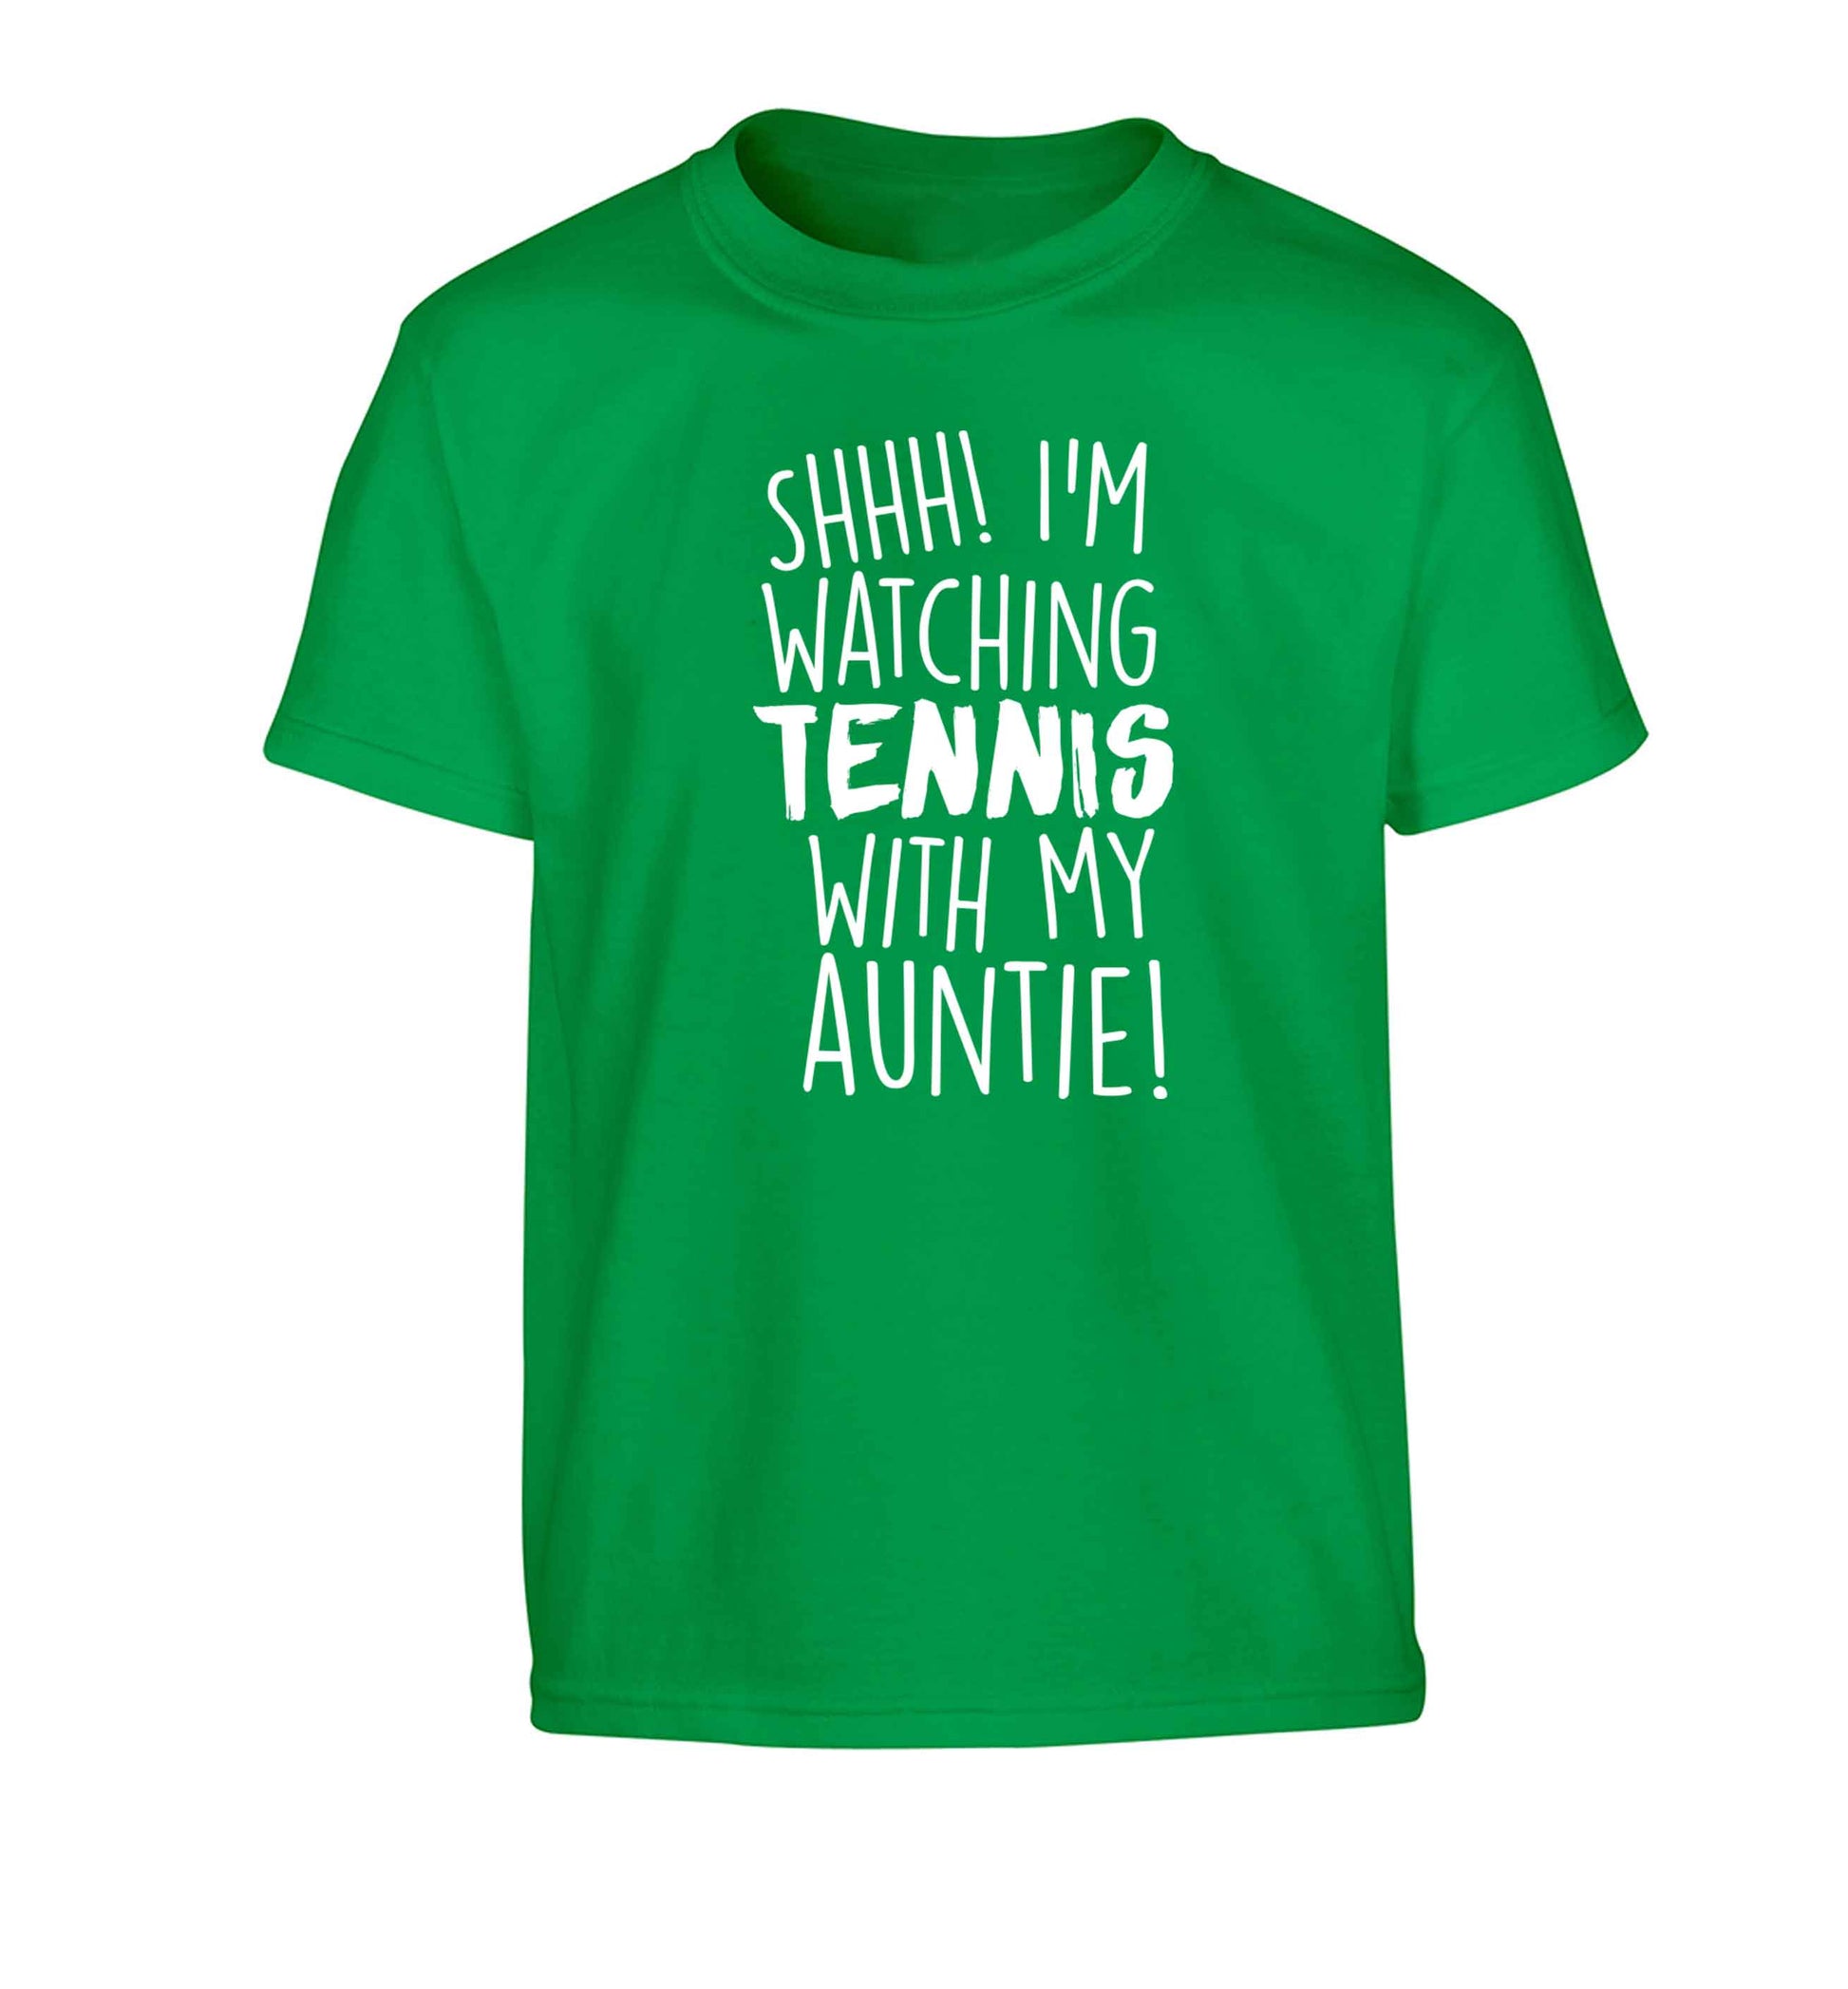 Shh! I'm watching tennis with my auntie! Children's green Tshirt 12-13 Years